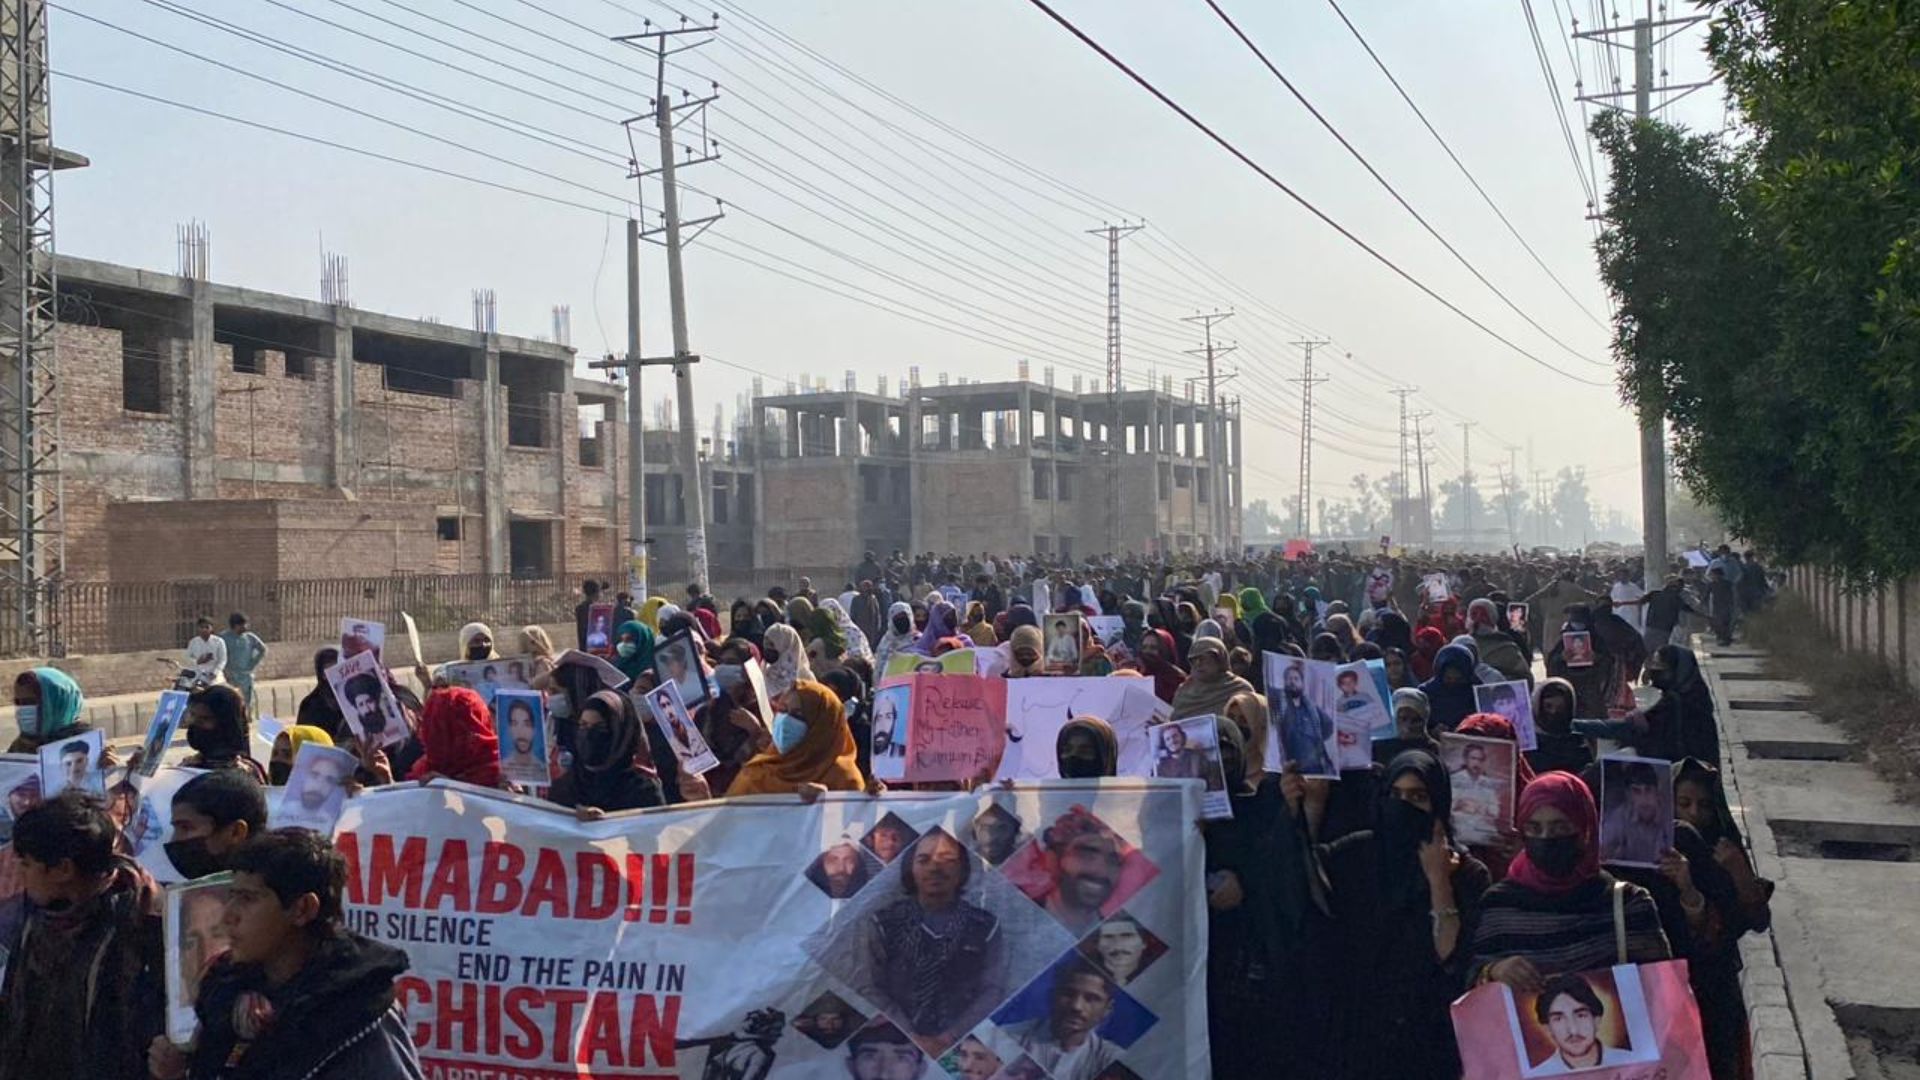 Balochistan: Massive protests against disappearances, brutality despite blockades